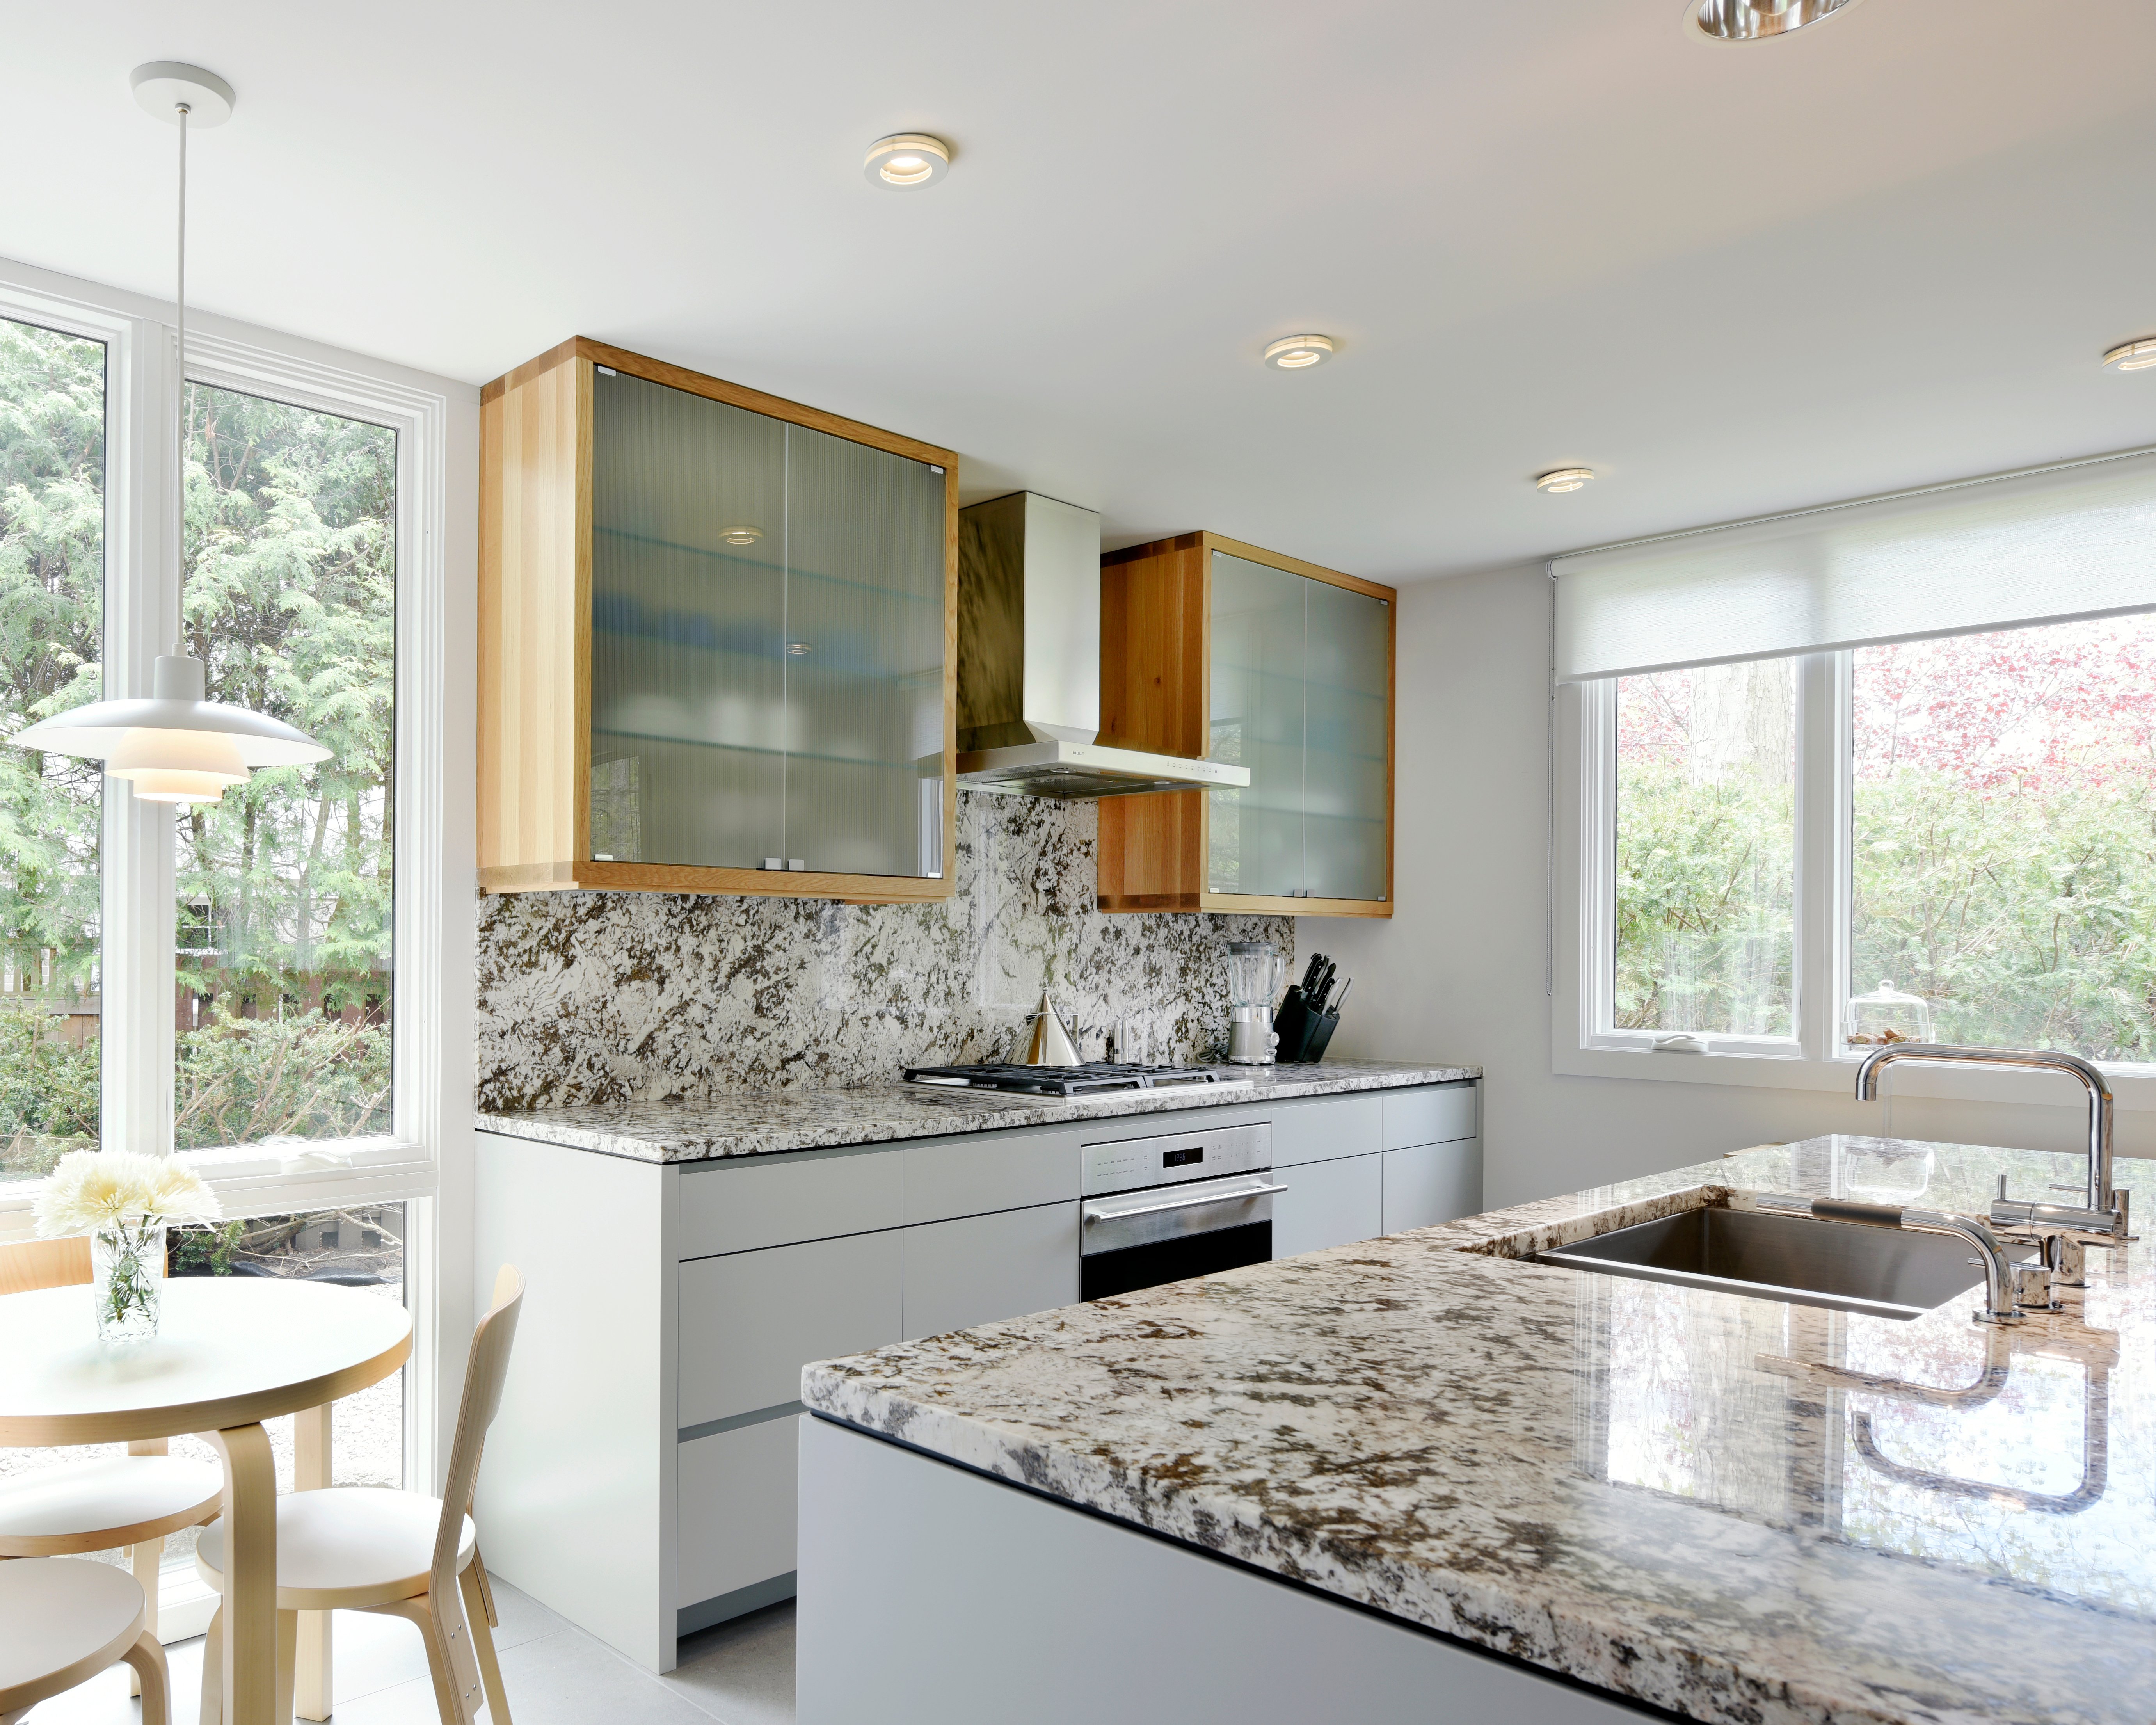 A Deslaurier kitchen design featuring a full-height speckled backsplash.